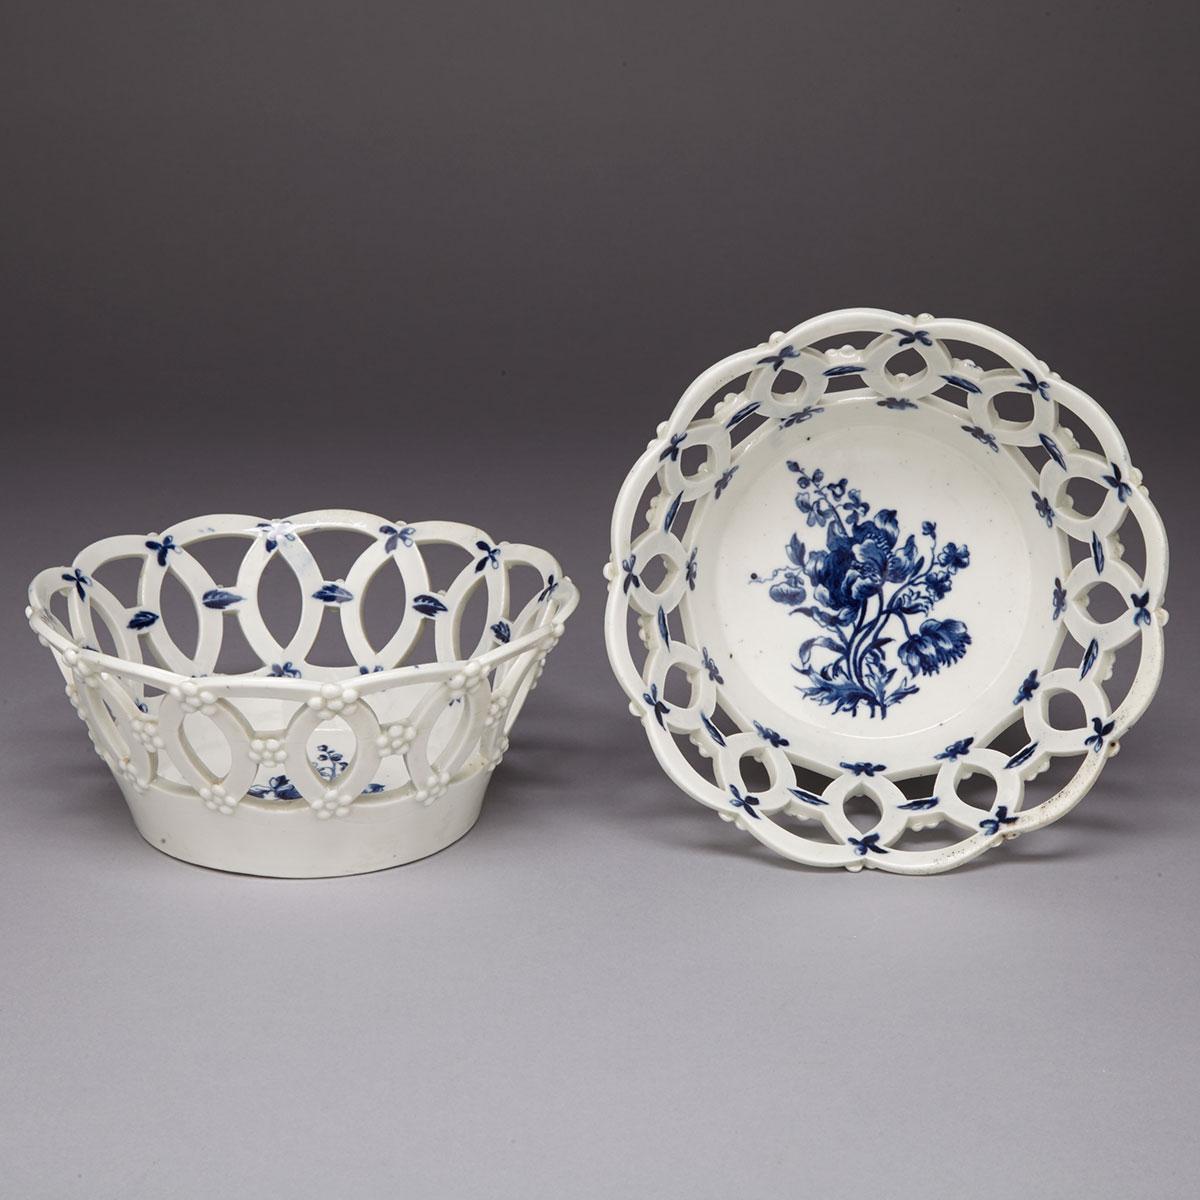 Pair of Worcester ‘Anemone and Bellflower Spray’ Circular Baskets, c.1760-65